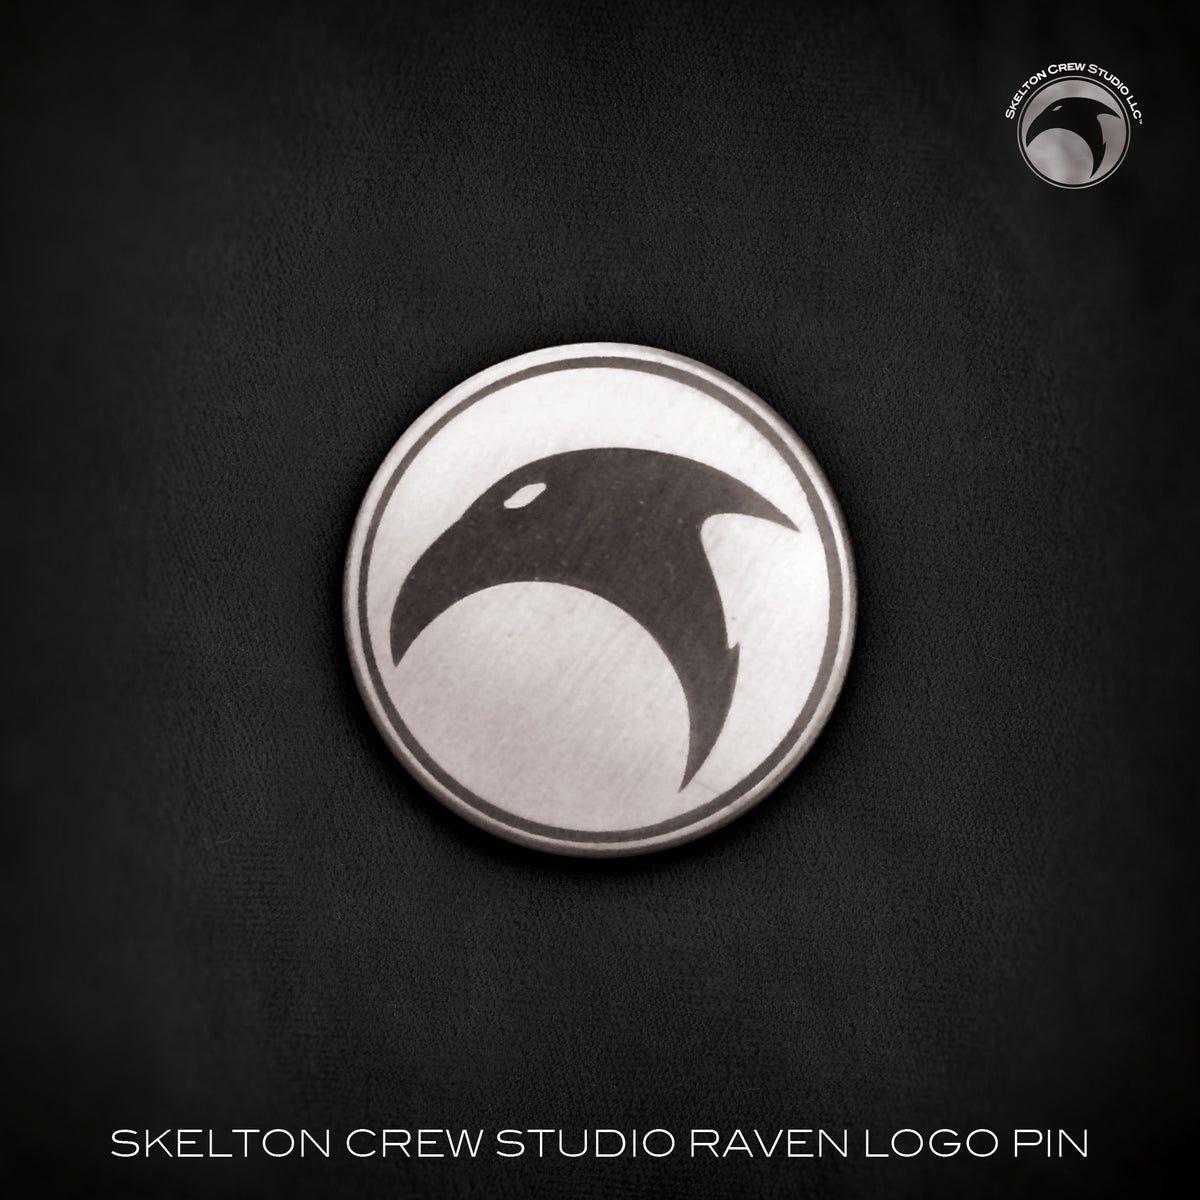 Raven Logo - The Skelton Crew Collection: Antique Raven's Head logo pin!